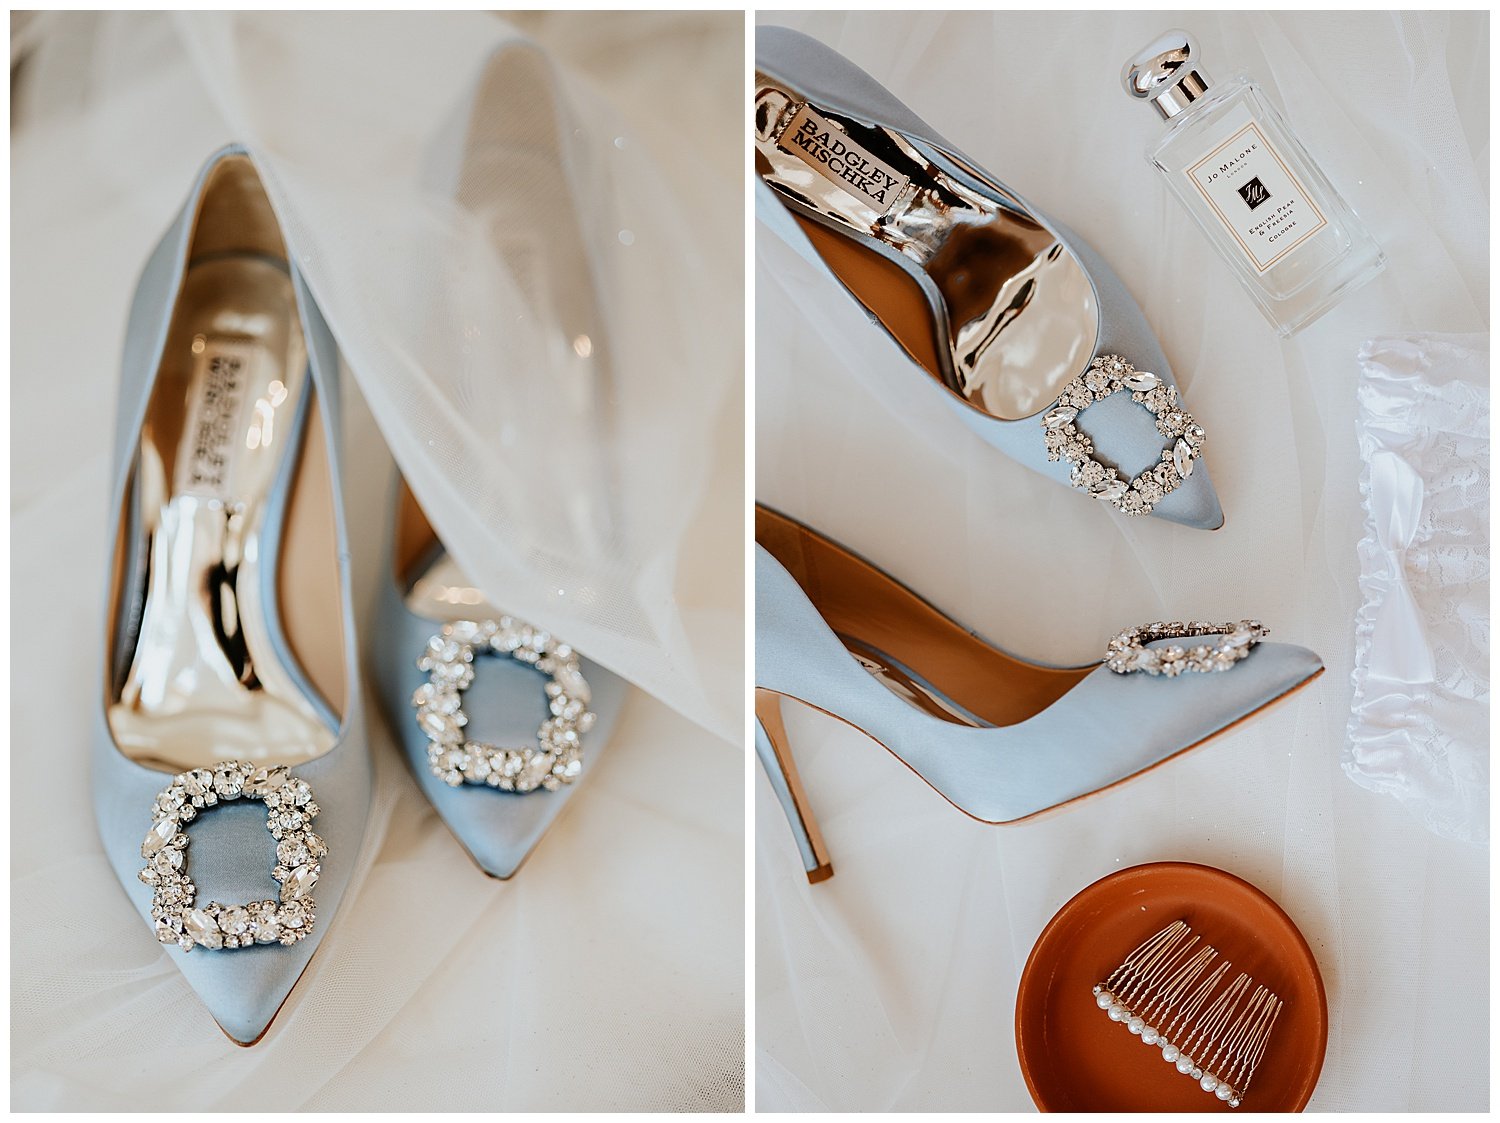 mischka badgley bridal blue shoes and jo malone perfume bottle brides details